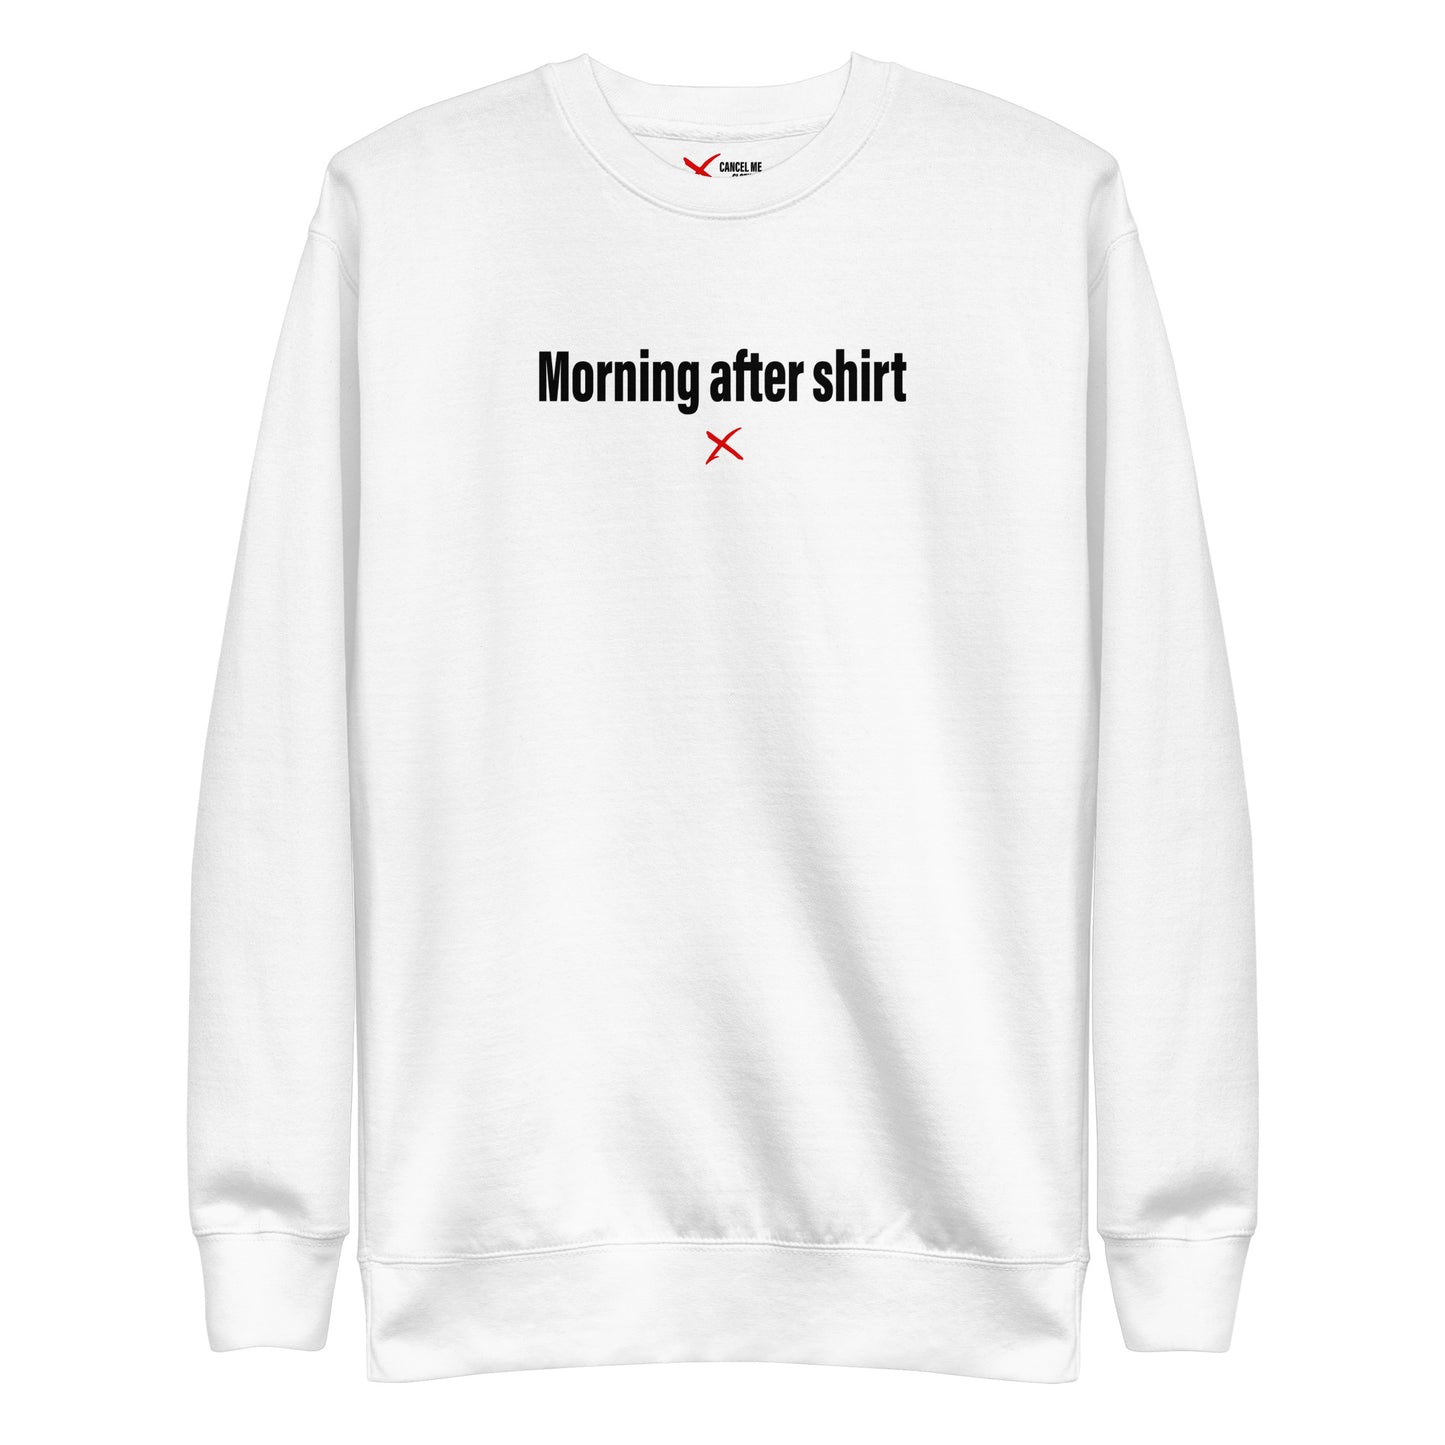 Morning after shirt - Sweatshirt